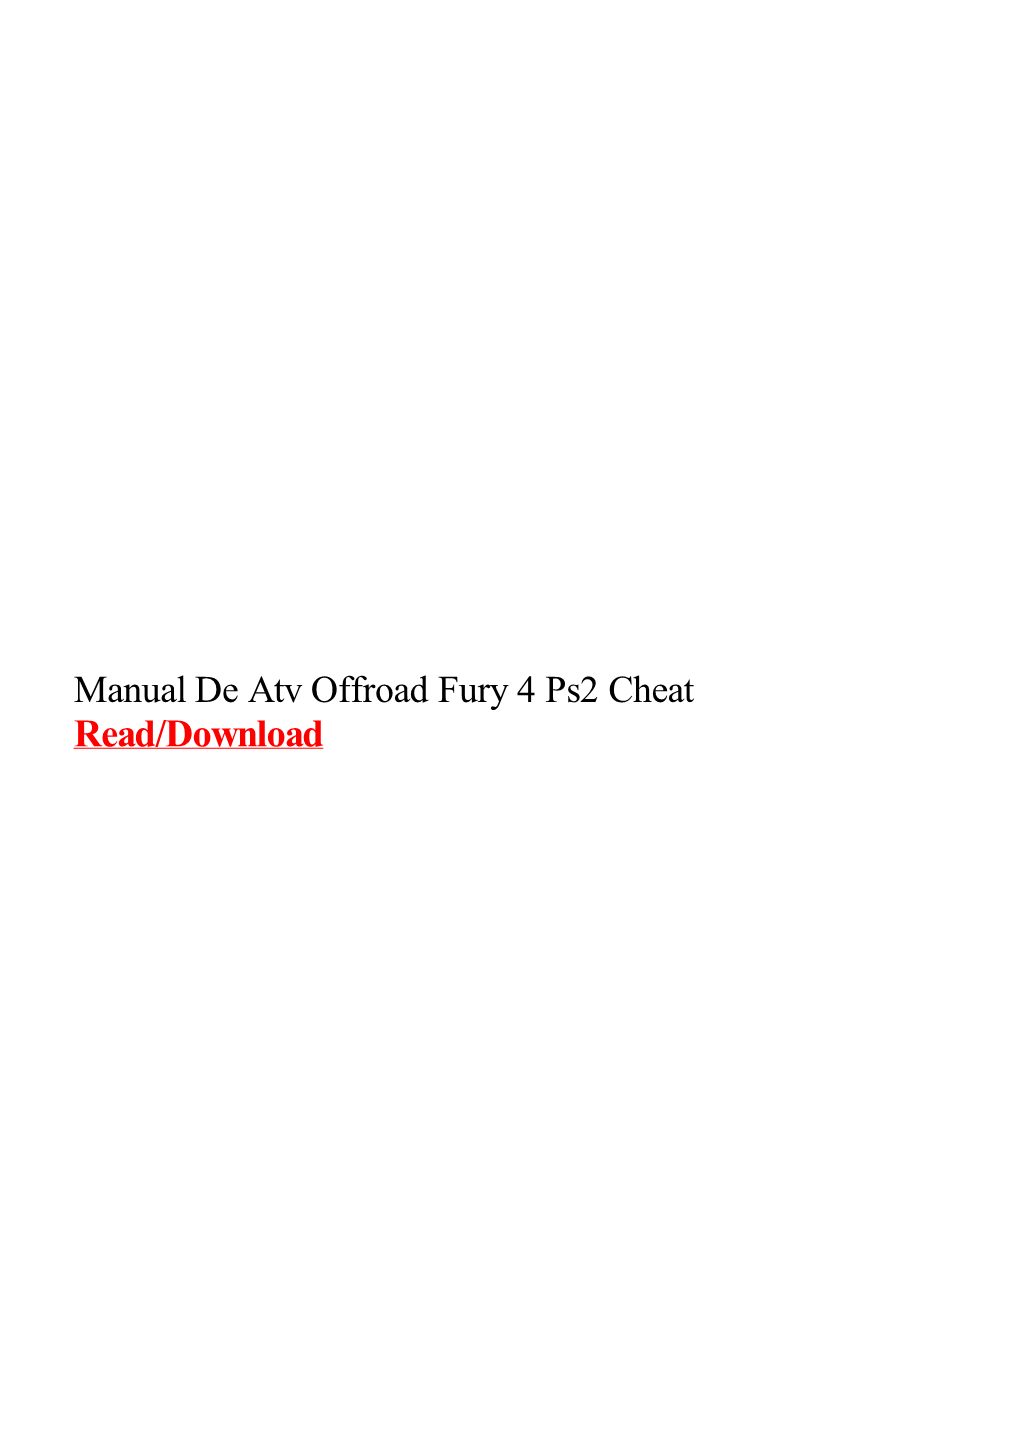 Manual De Atv Offroad Fury 4 Ps2 Cheat